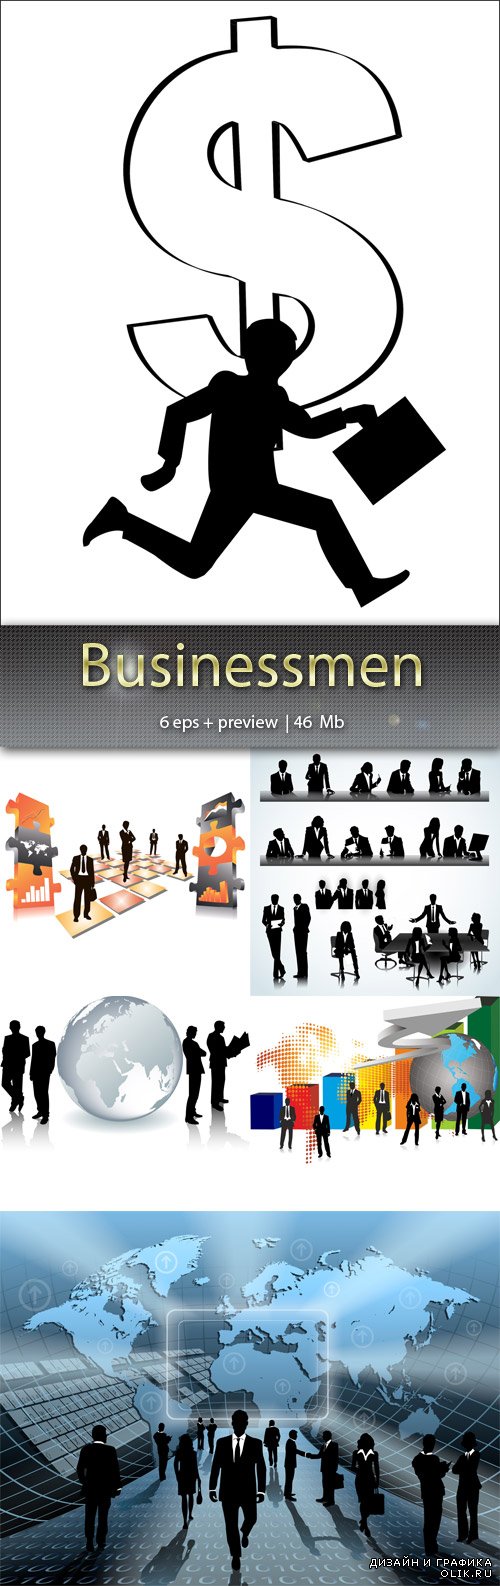 Бизесмены – Businessmen